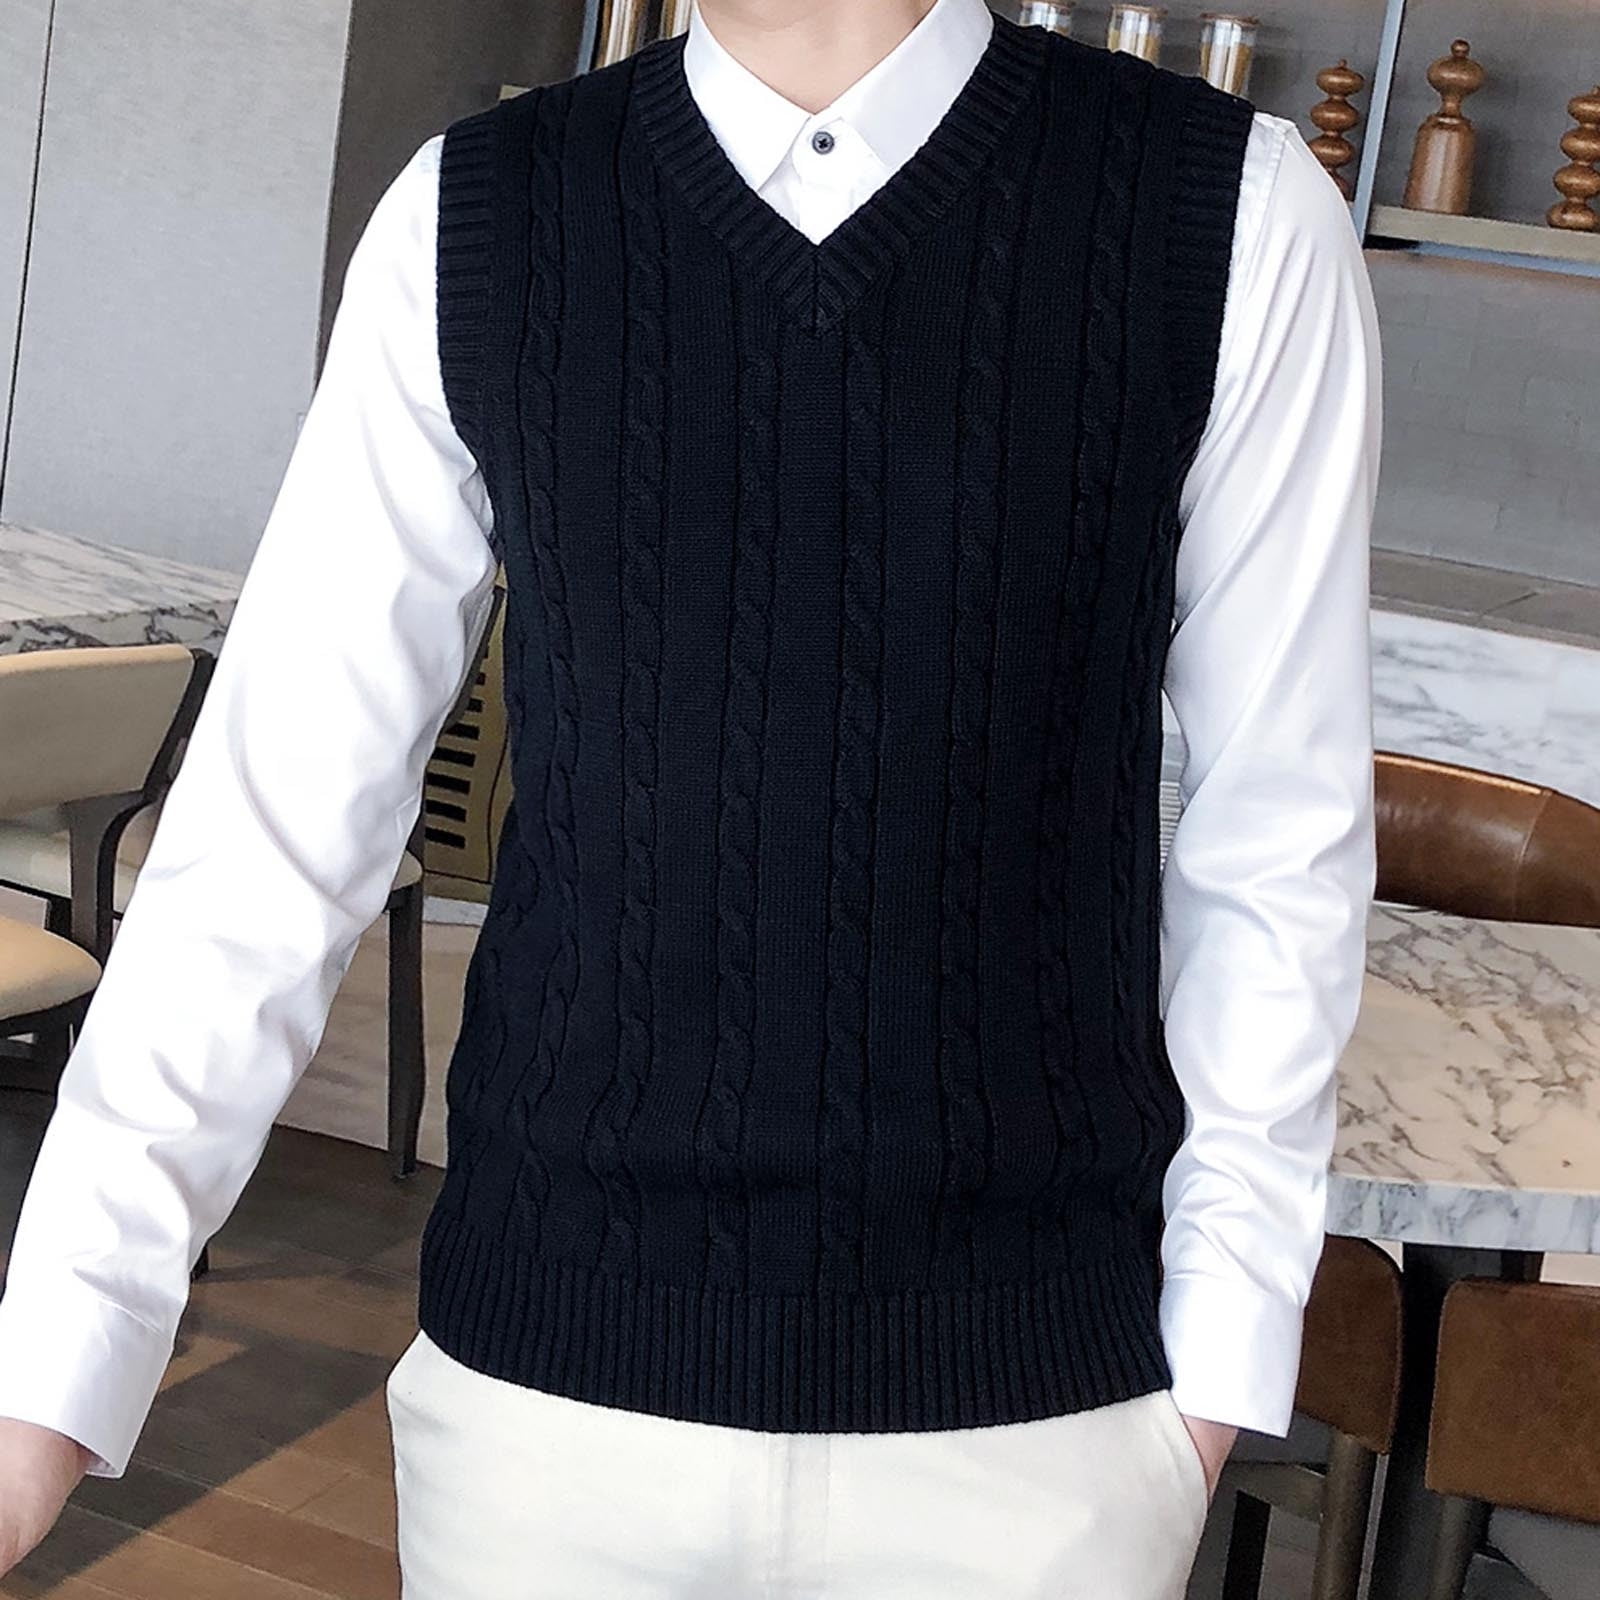 Konus Konus Men's Sweater Utility Vest With Bellow Pockets in